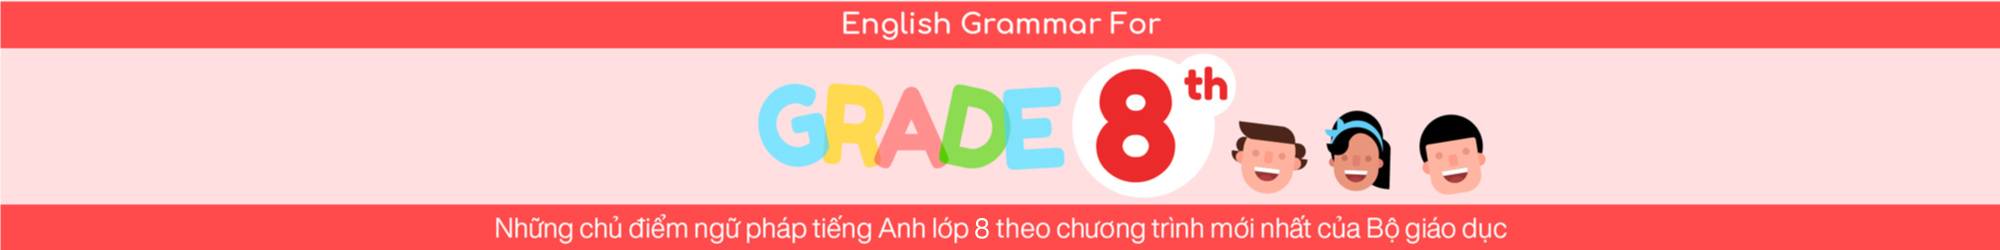 ENGLISH GRAMMAR FOR 8TH GRADE banner